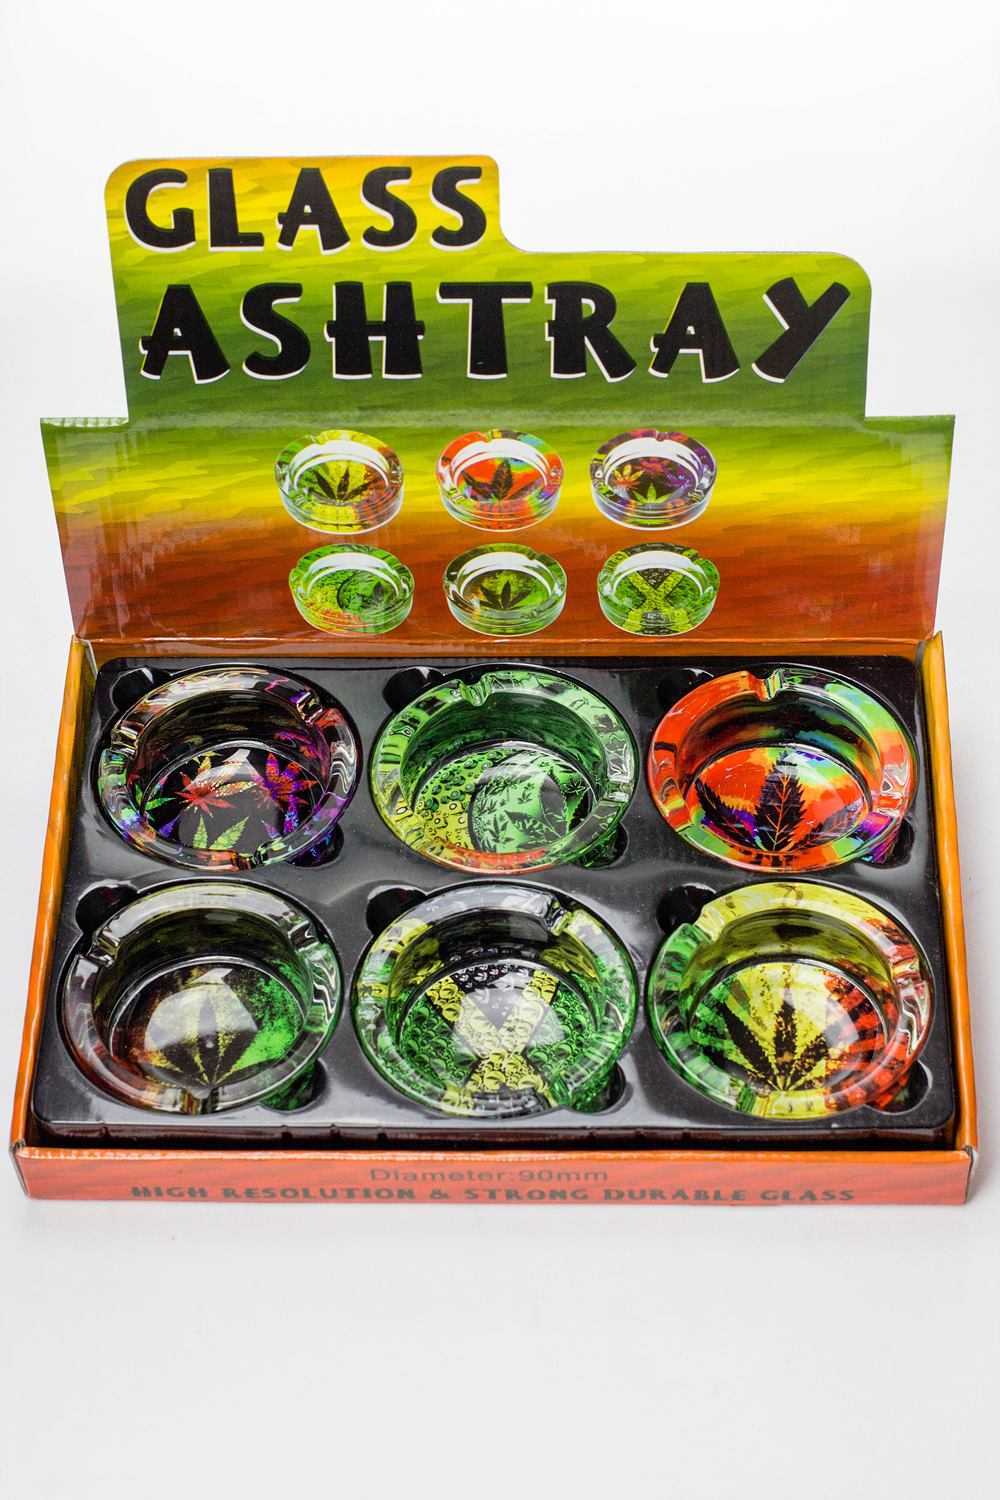 Round glass ashtray display